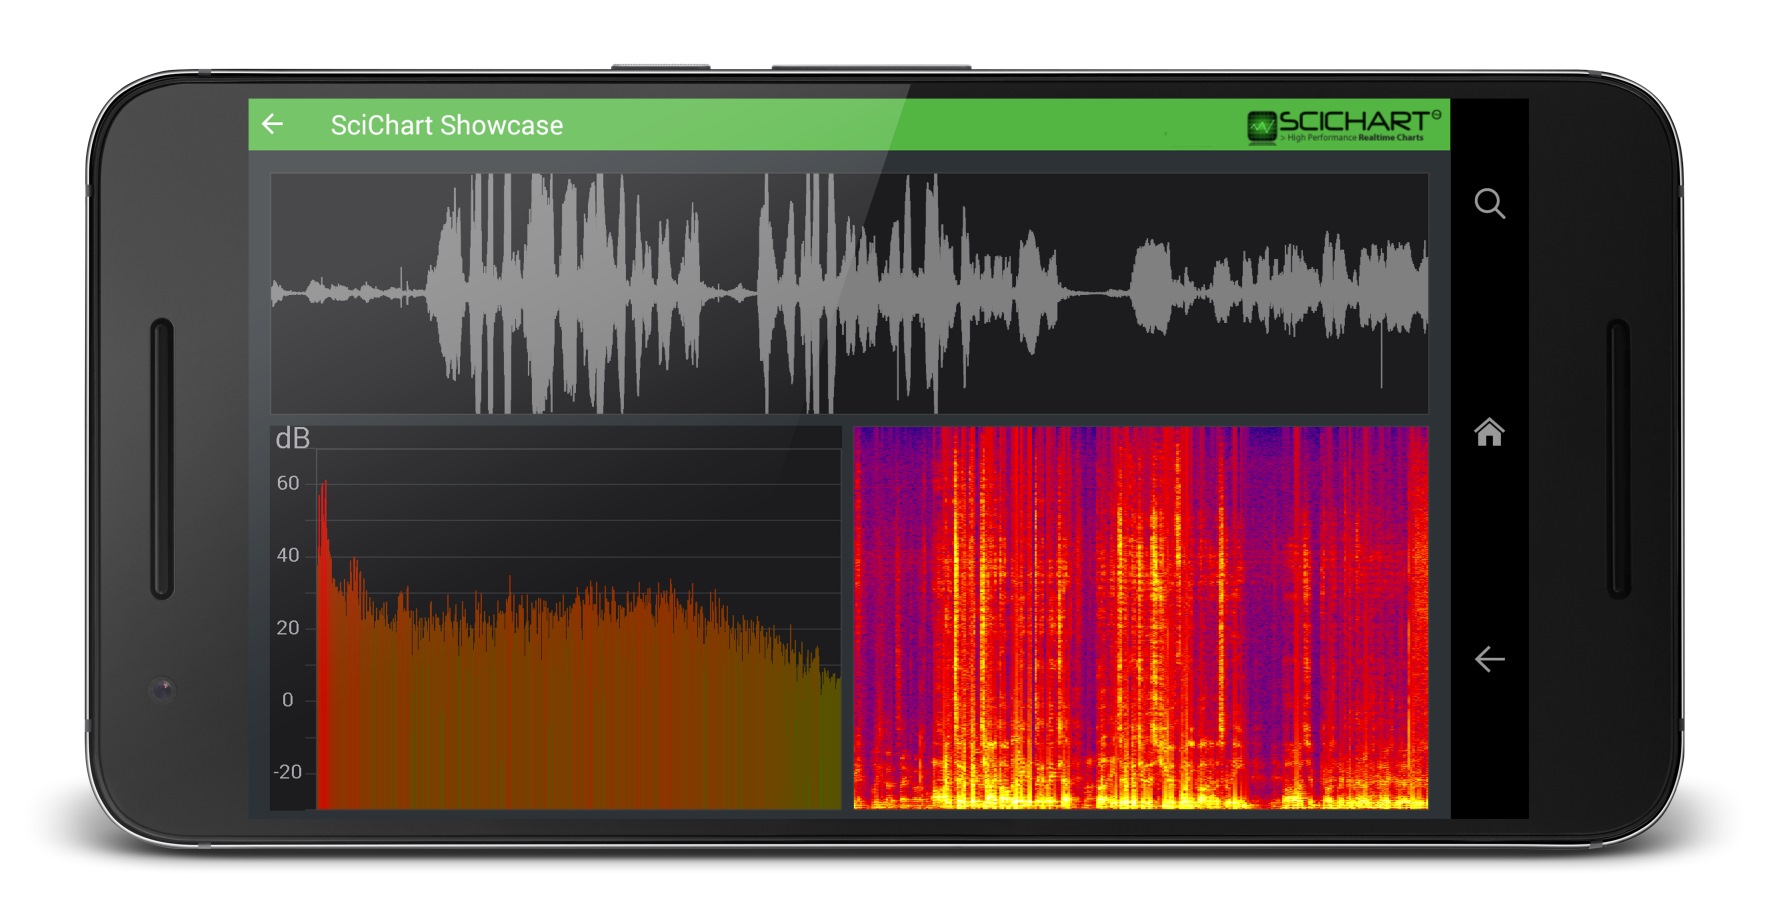 Изм звук. FFT анализатор спектра. Спектрограмма с анализатора спектра. Анализатор звукового спектра 1.27. Спектр анализатор сигнала аудио.